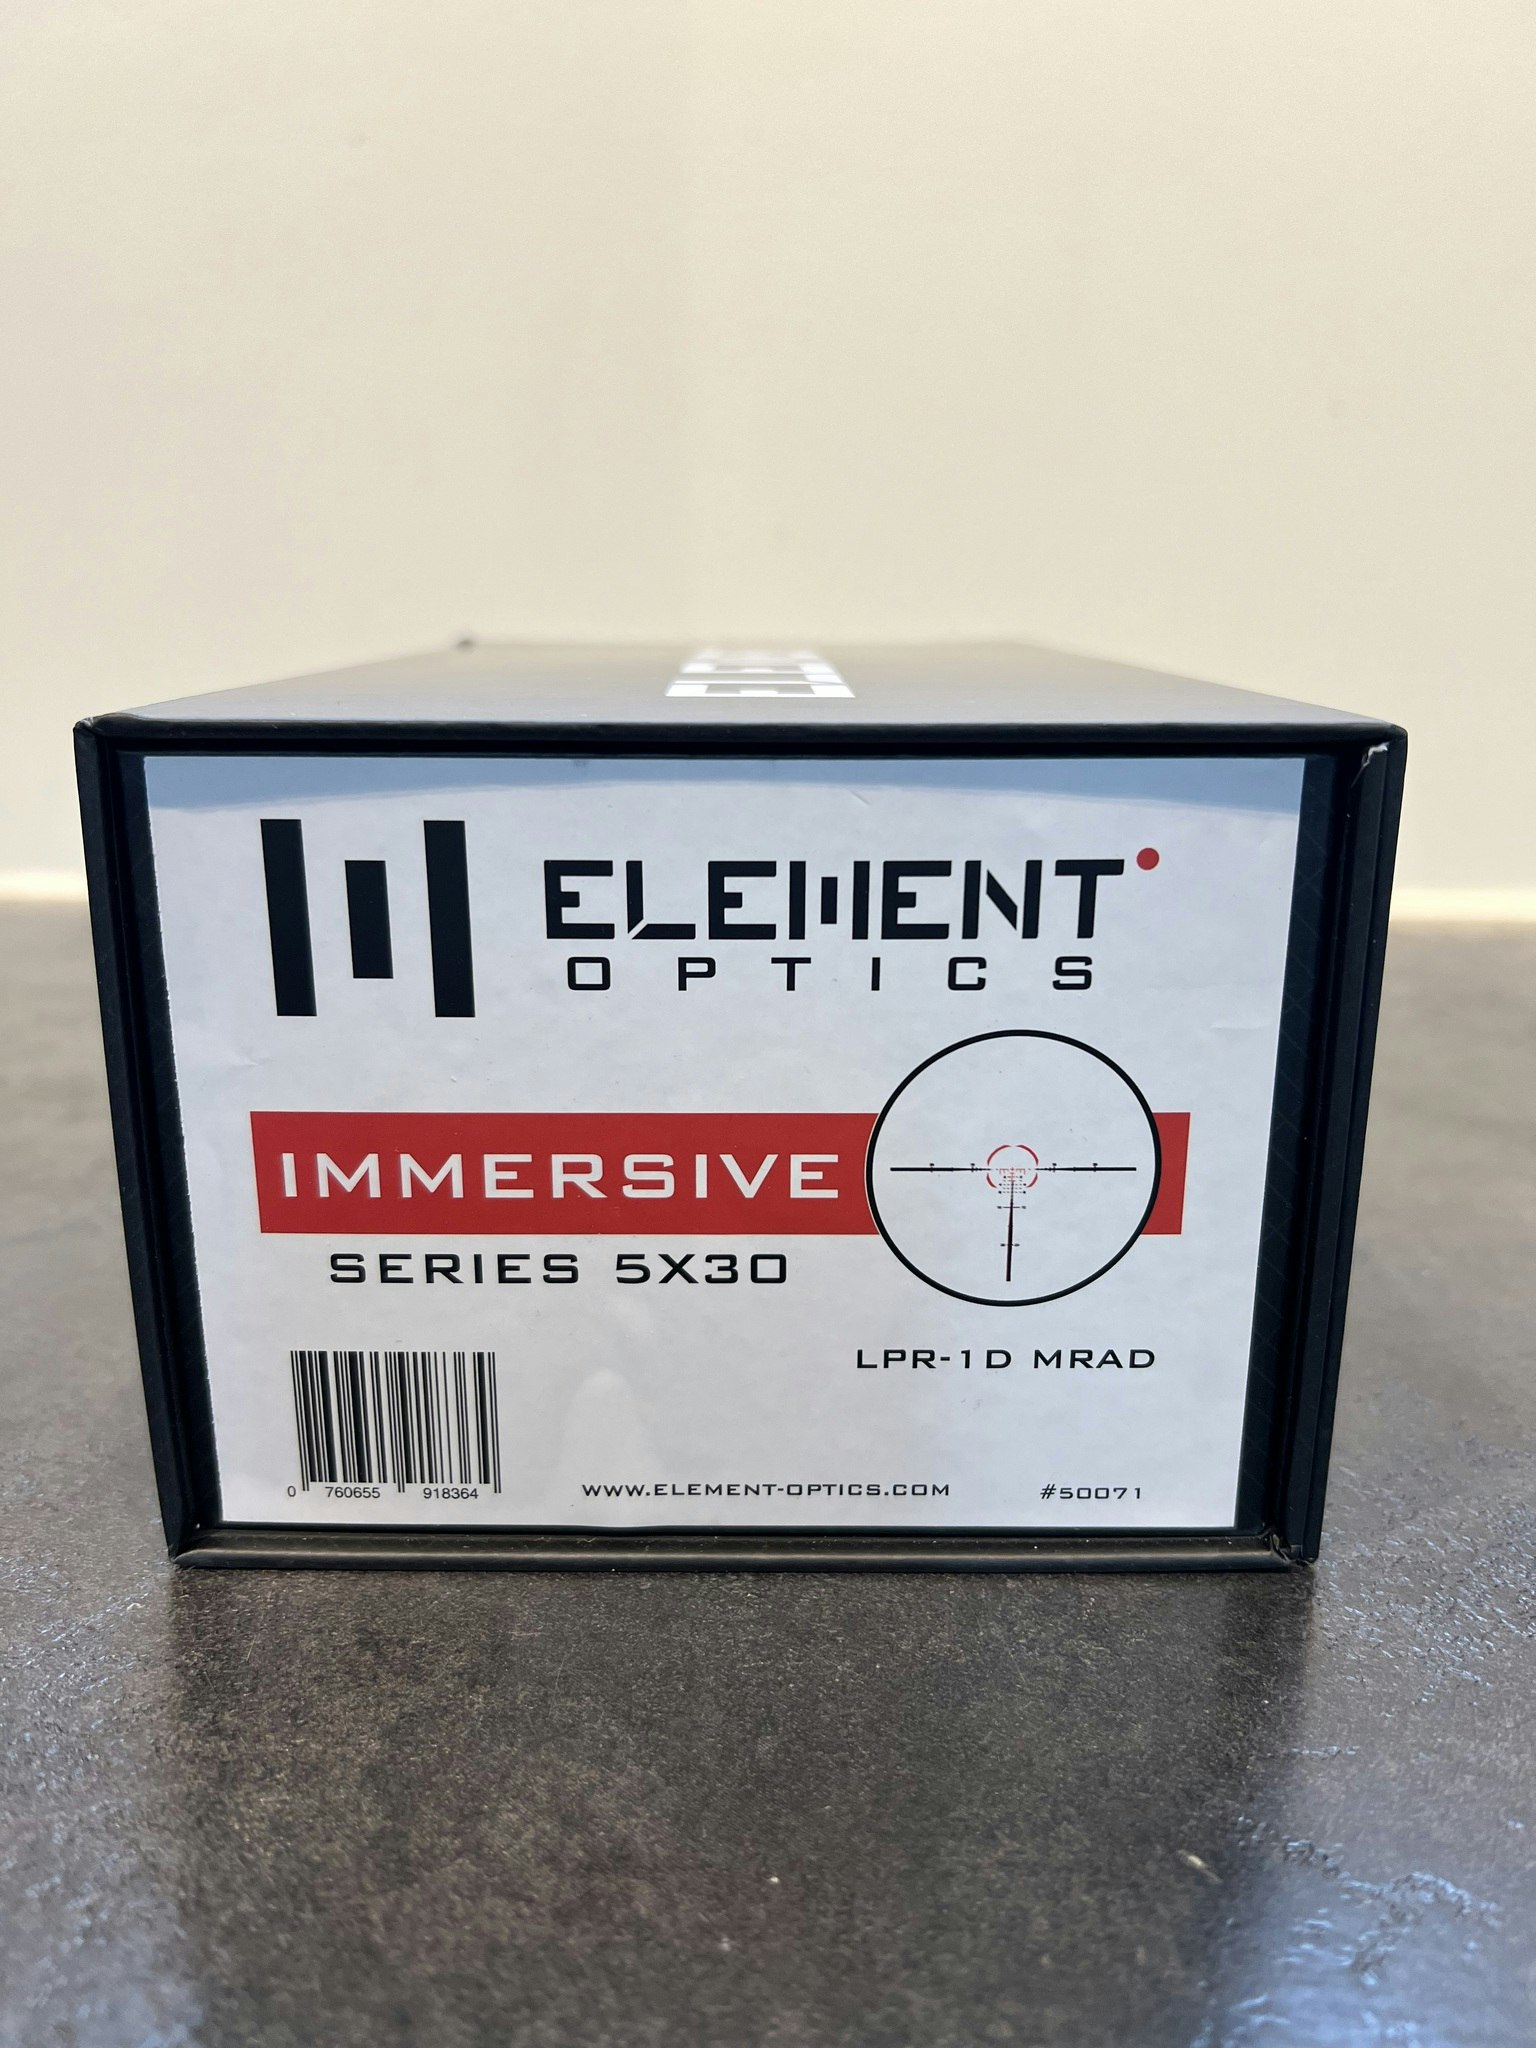 Element Optics Immersive Series 5x30, LPR-1D MRAD Reticle